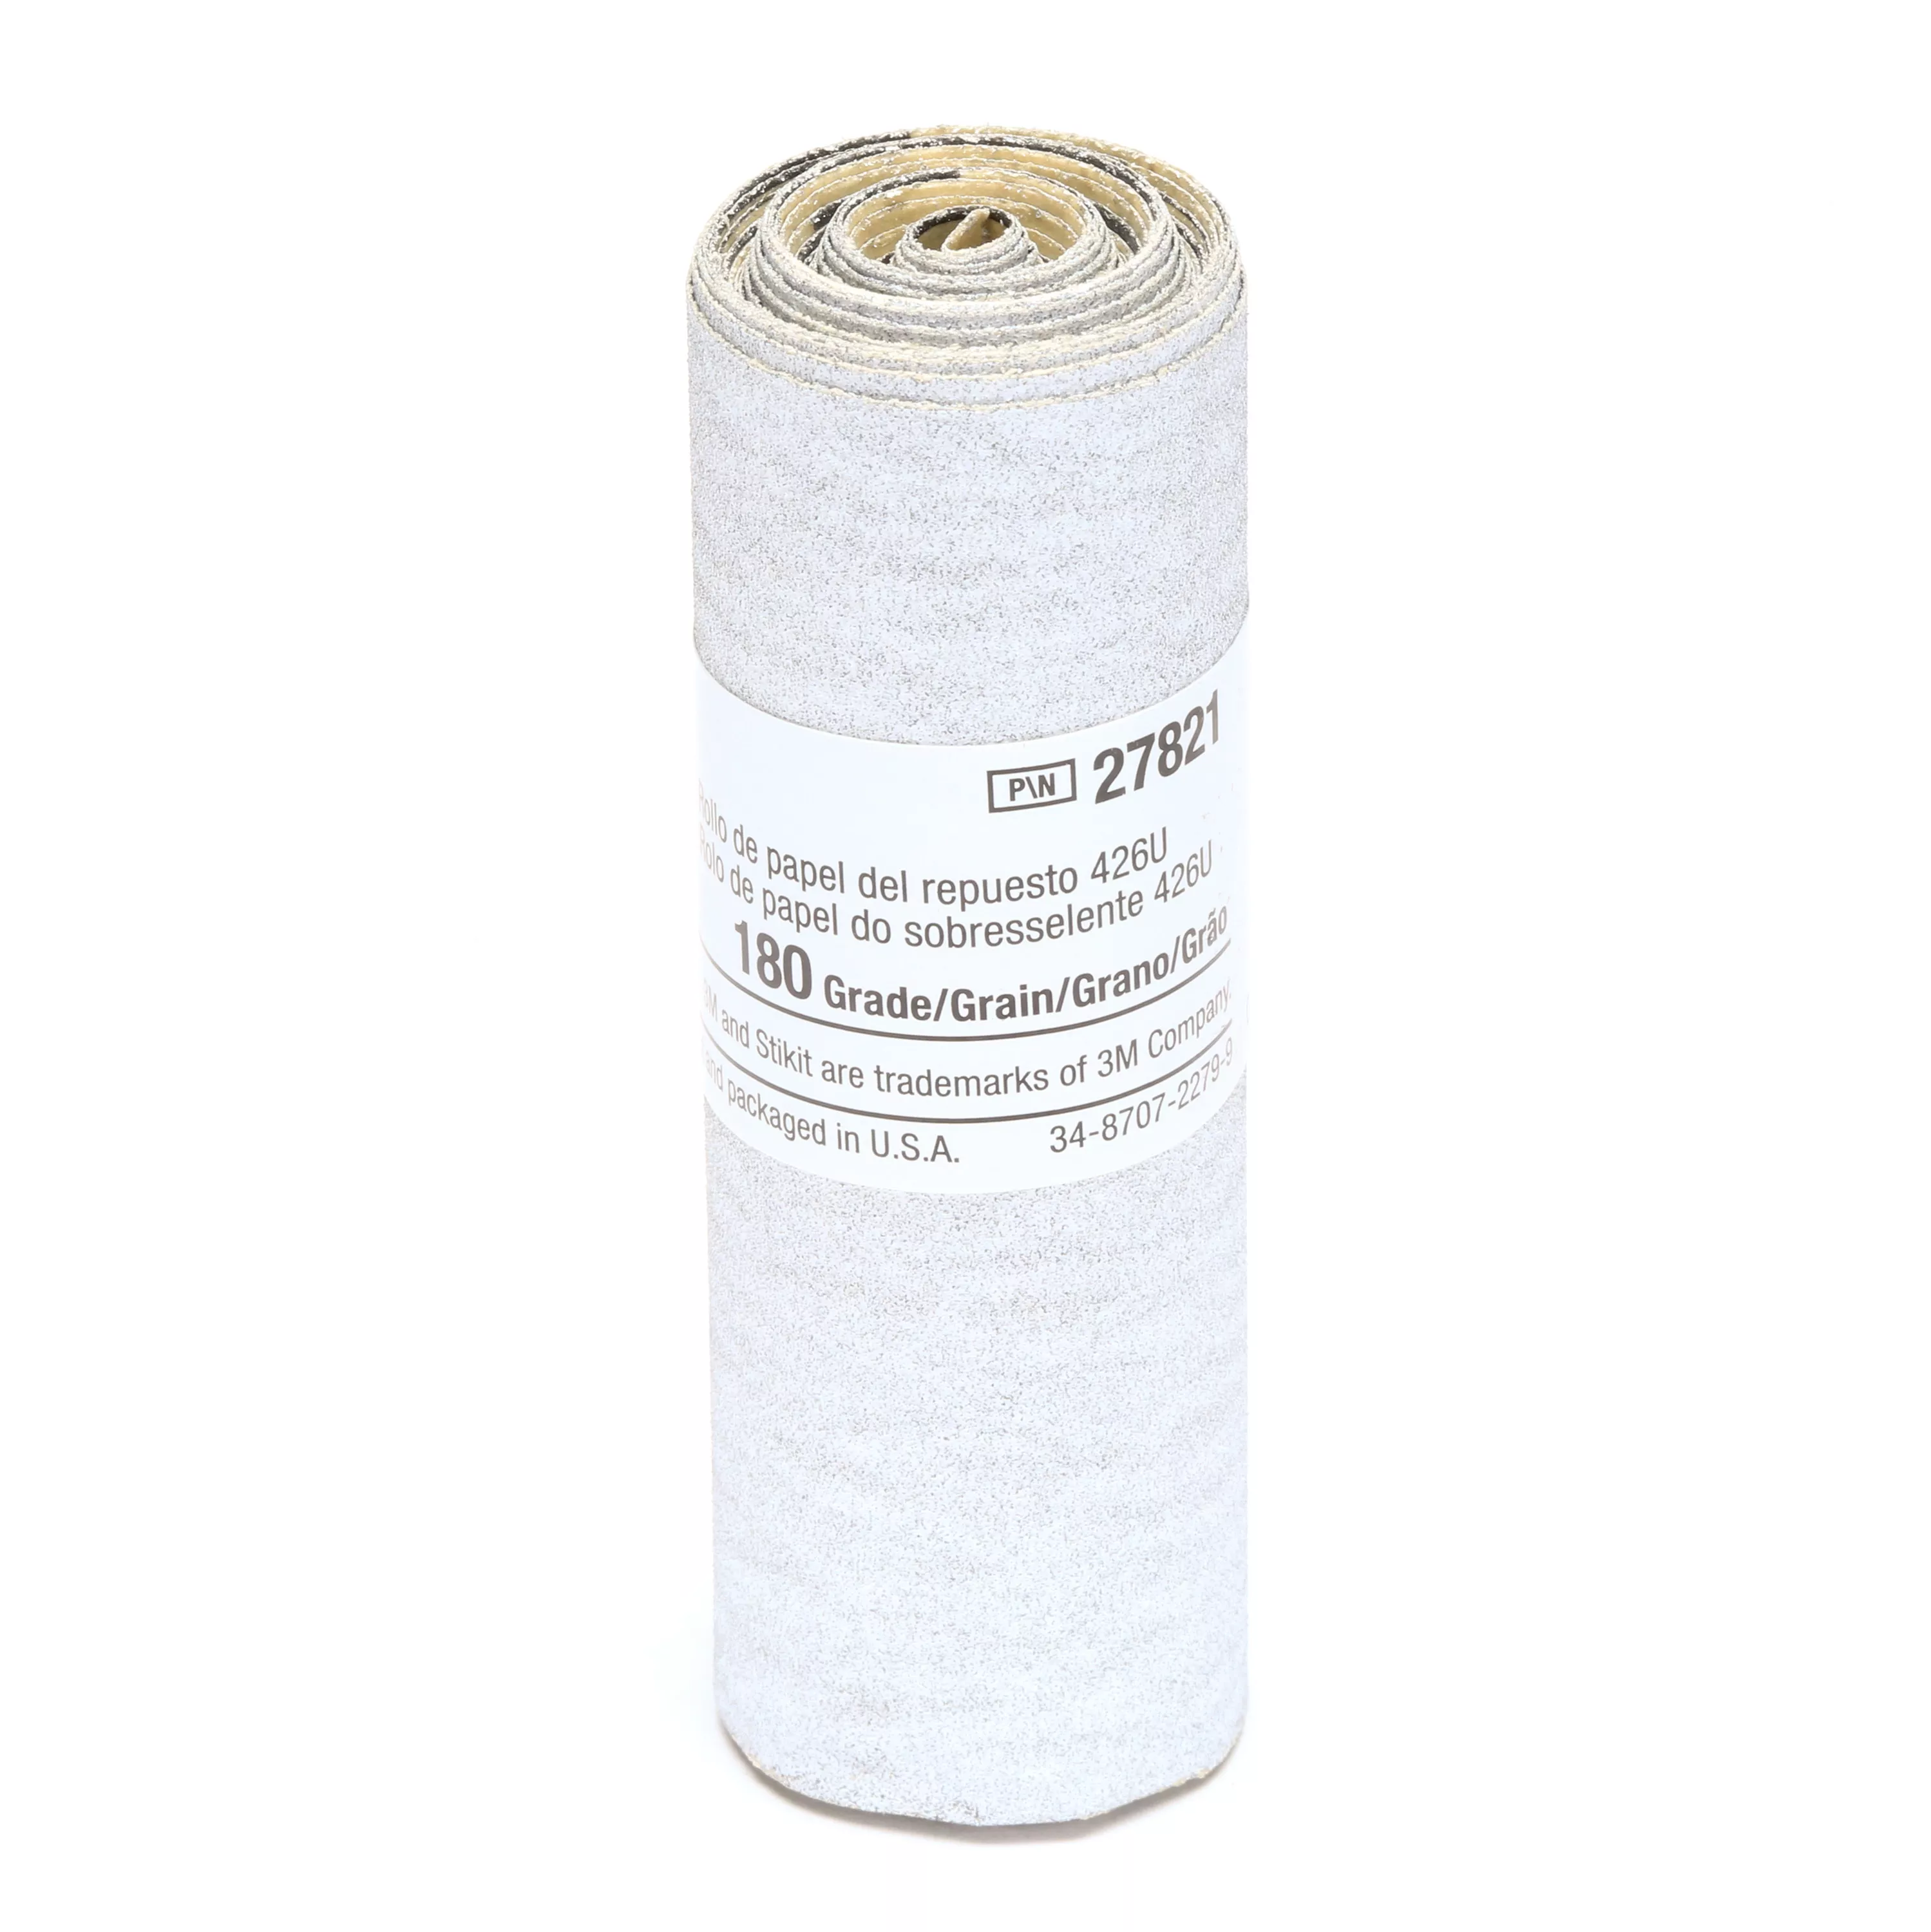 3M™ Stikit™ Paper Refill Roll 426U, 3-1/4 in x 85 in 180 A-weight,
10/Carton, 50 ea/Case